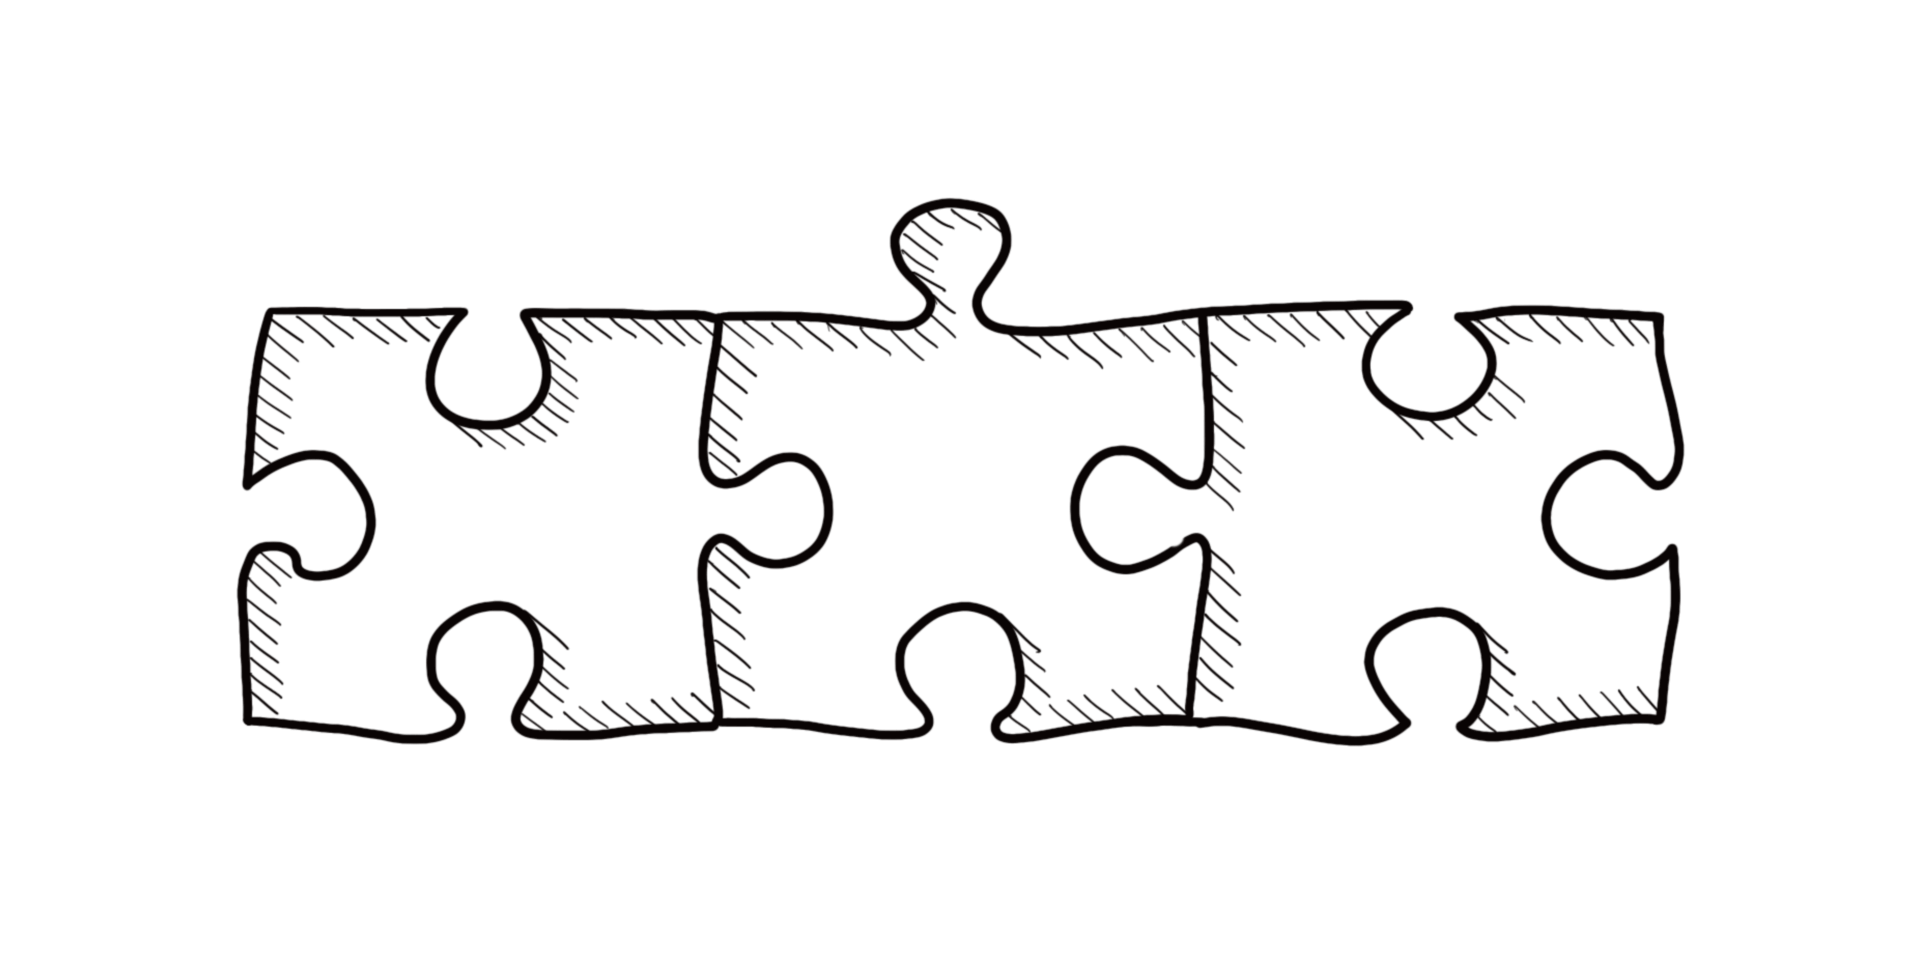 Illustration of three interlocked puzzle pieces